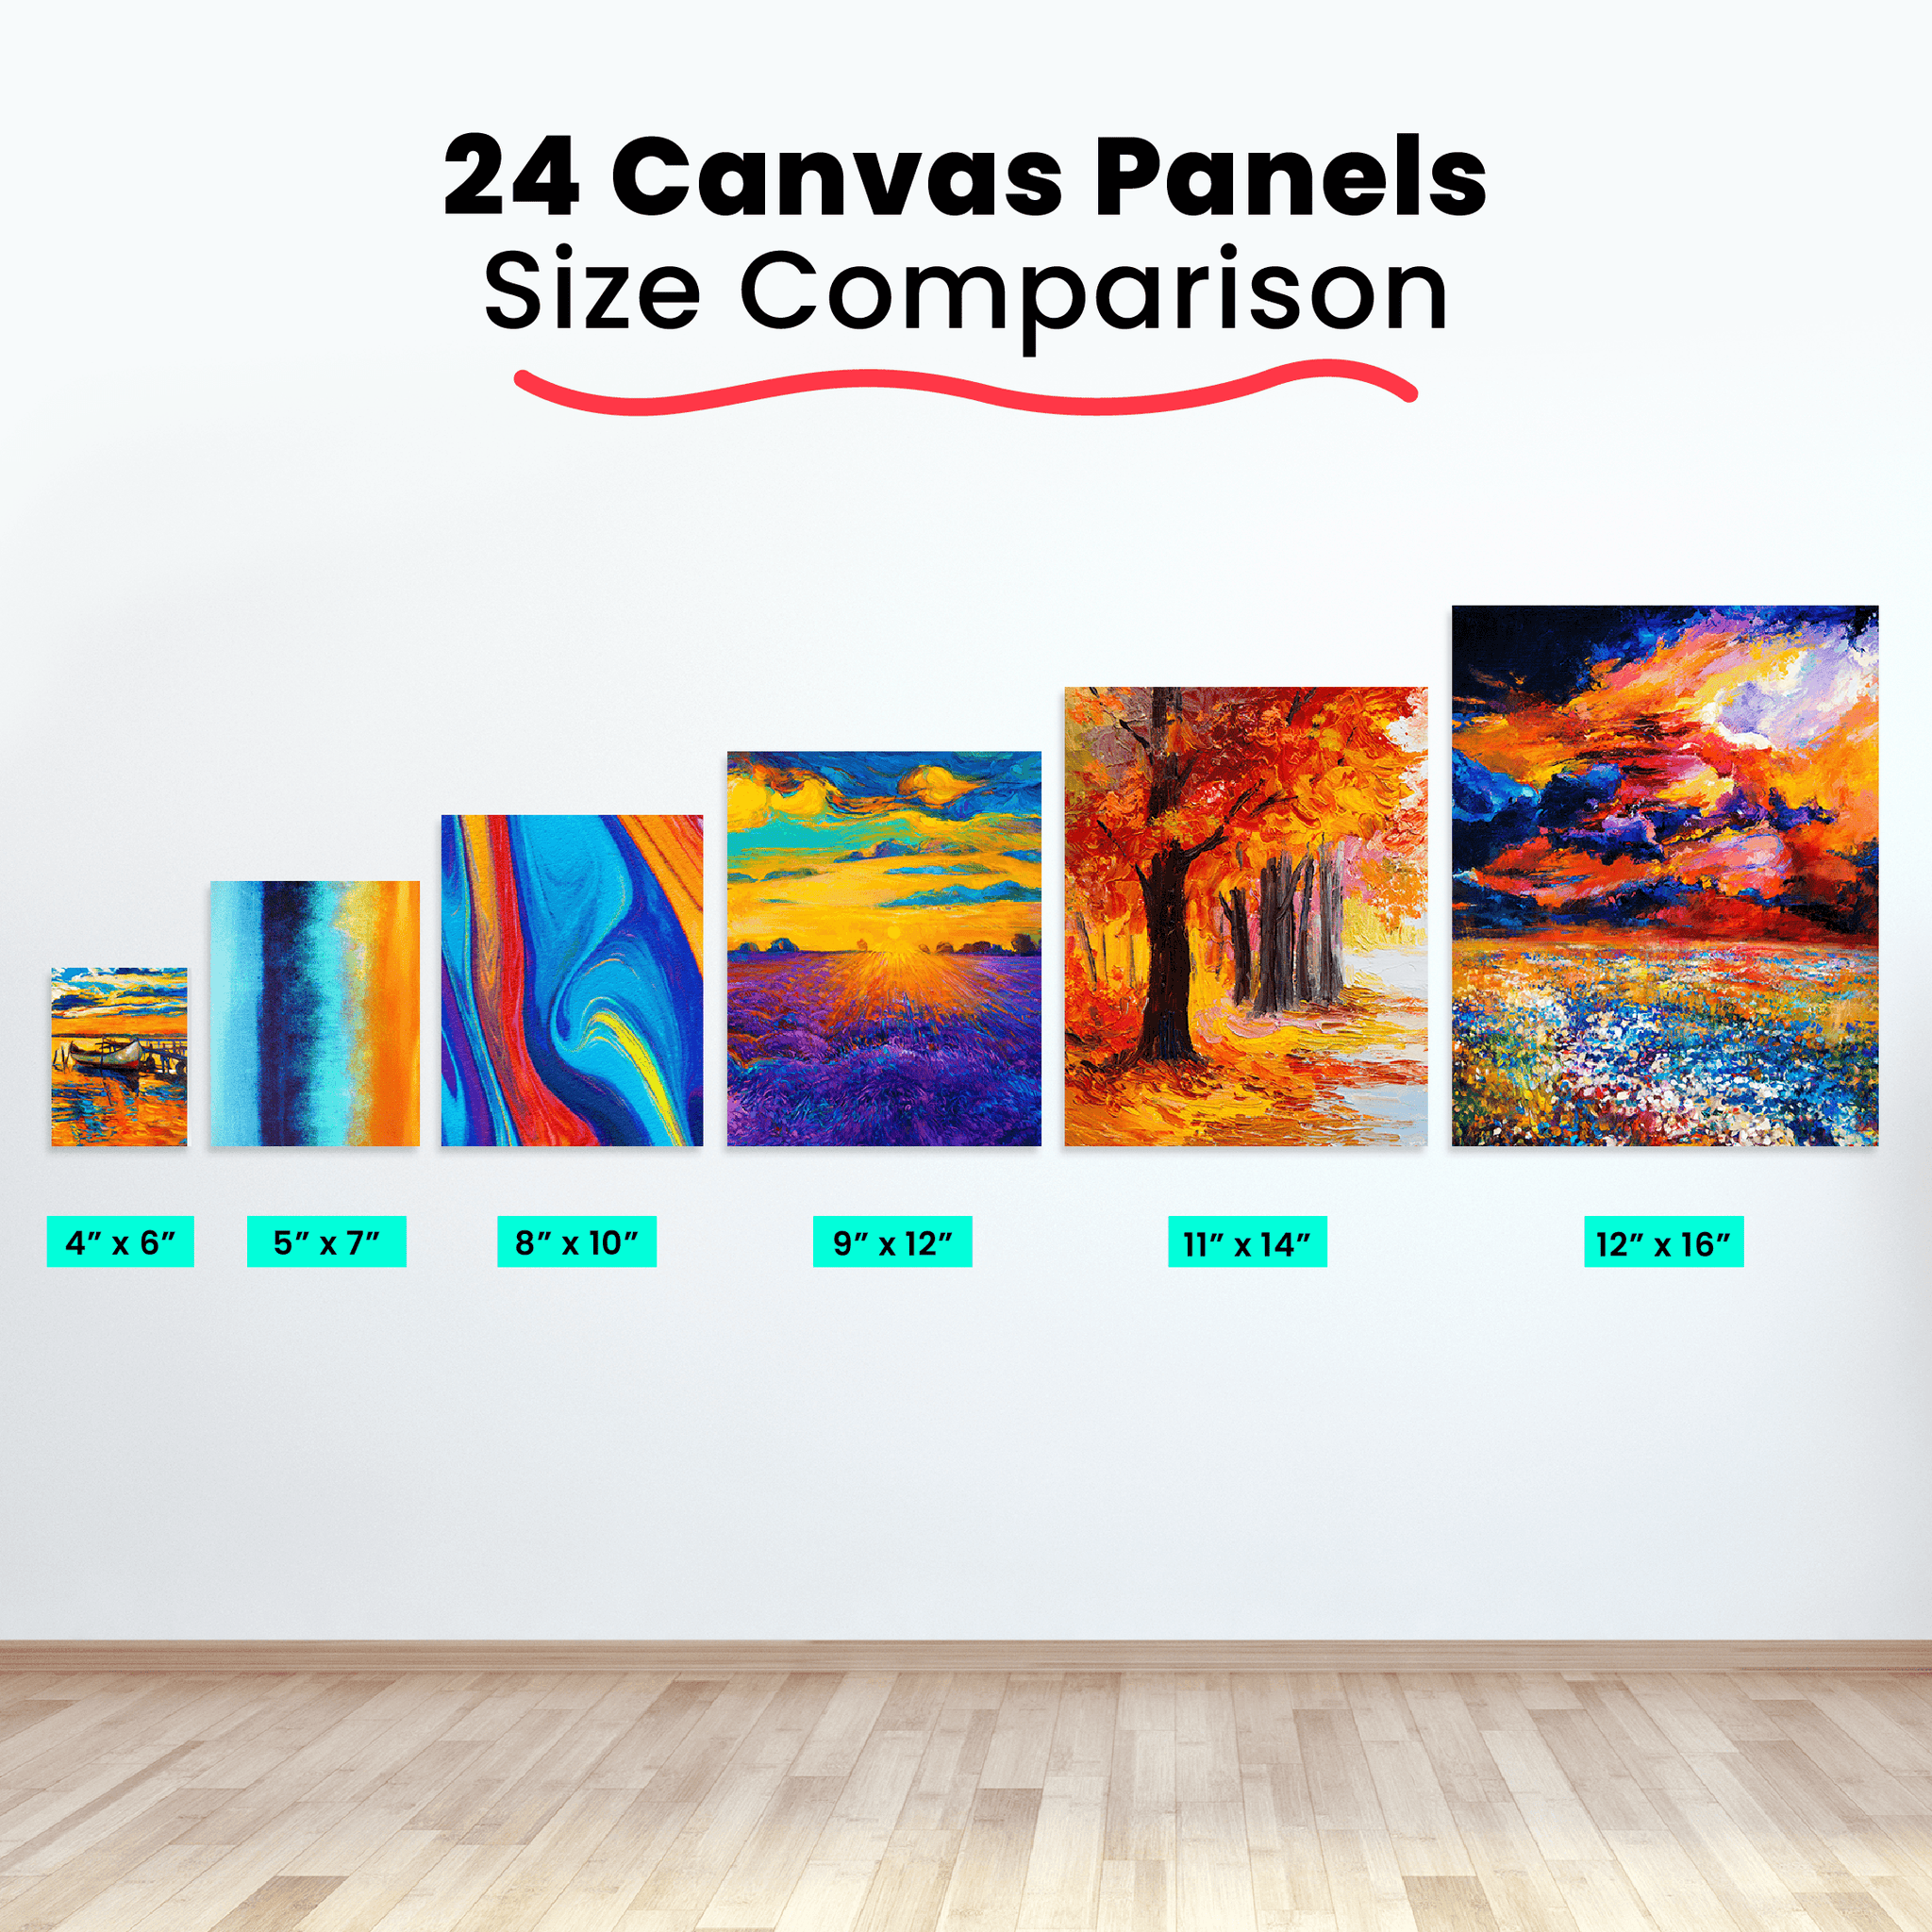 6 X 6 Black Acid Free Canvas Panels 6-Pack (1 Full Case of 6